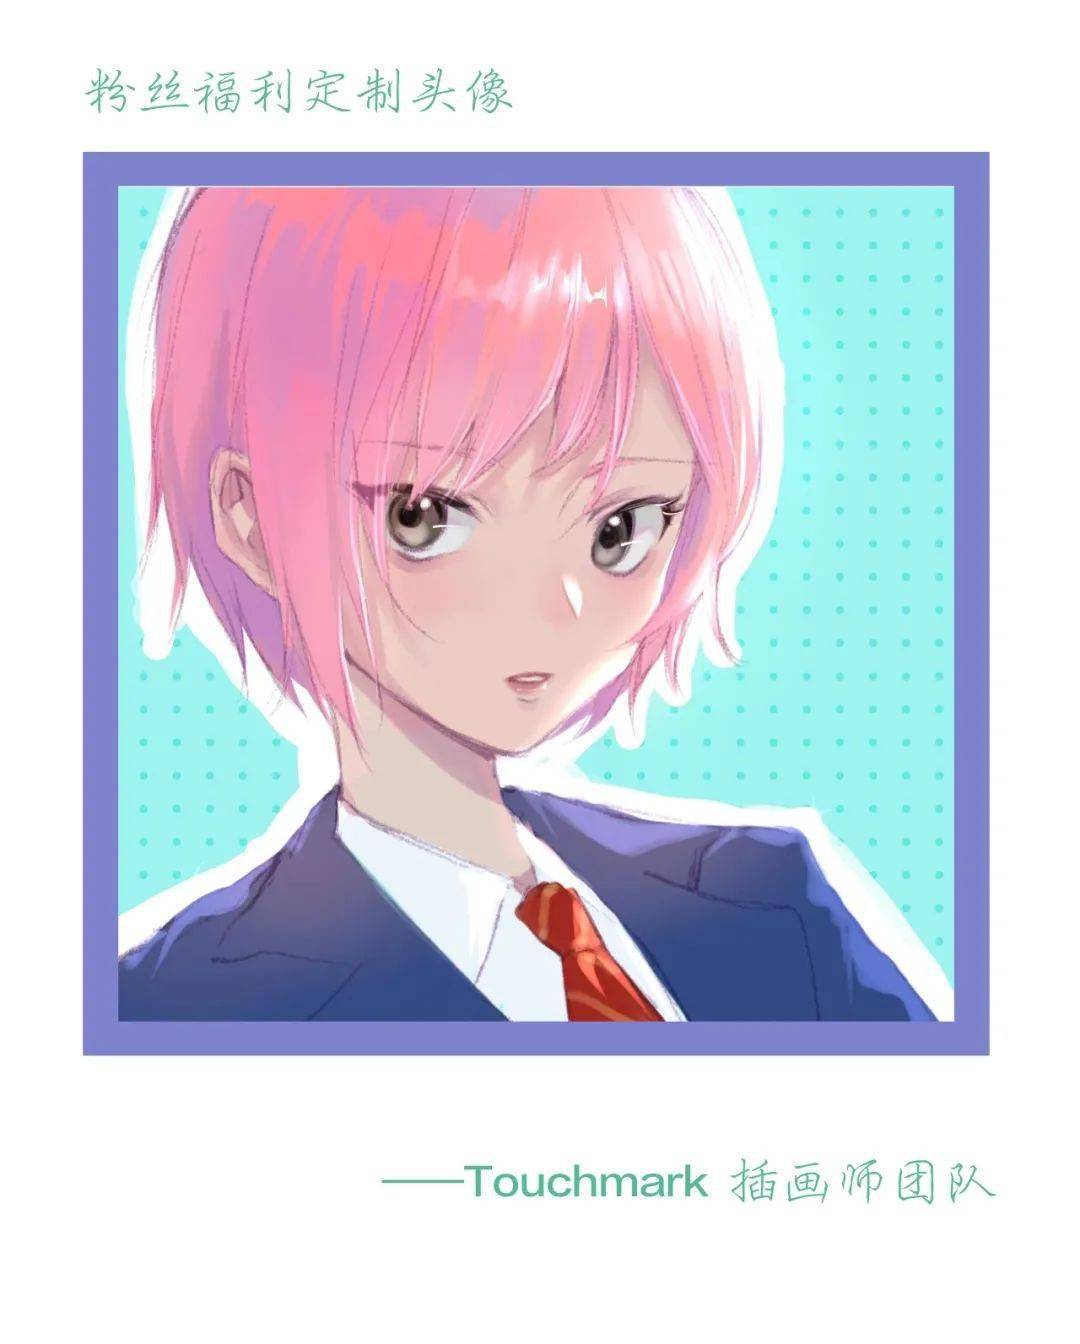 touchmark粉丝十二月福利日专刊丨粉丝定制头像请戳我!